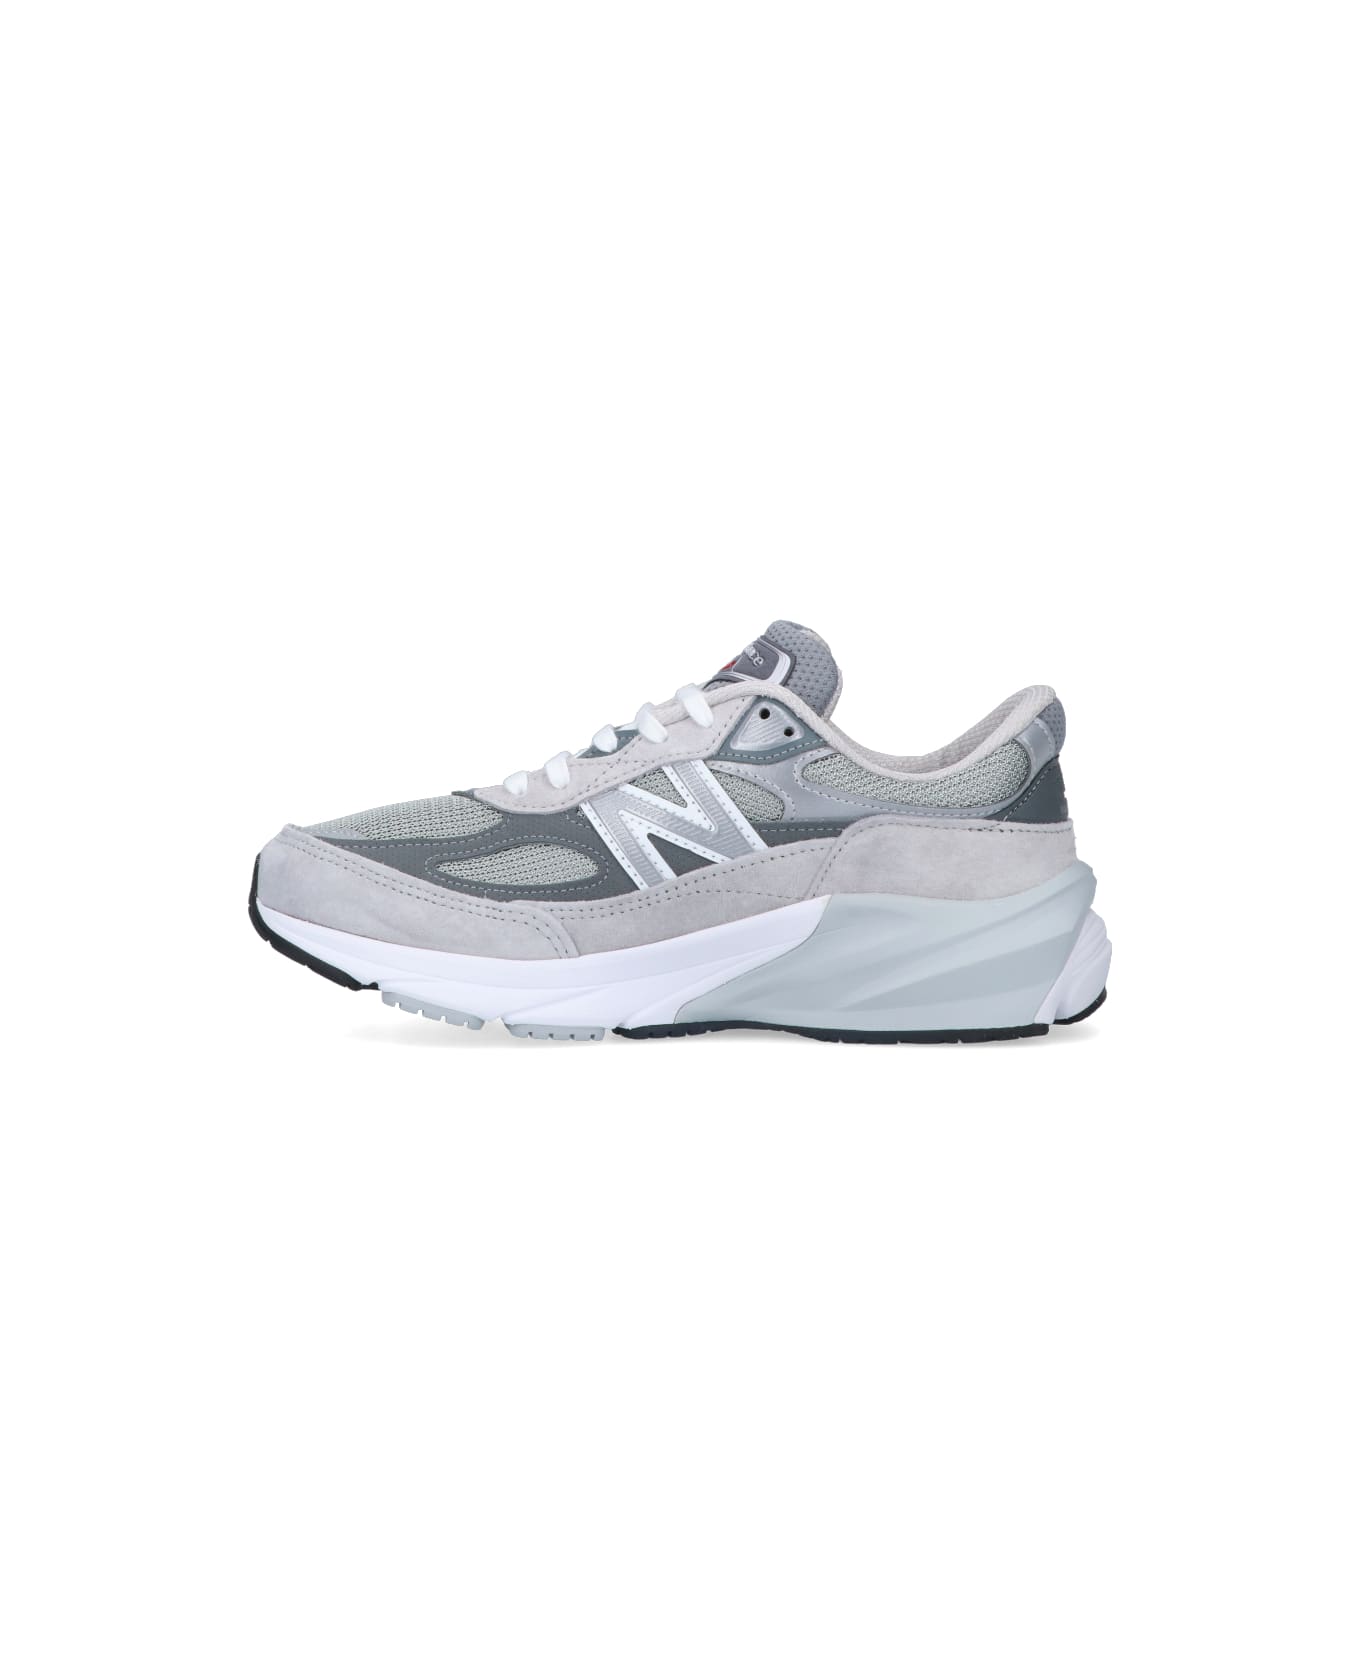 New Balance '990v6' Sneakers - Gray